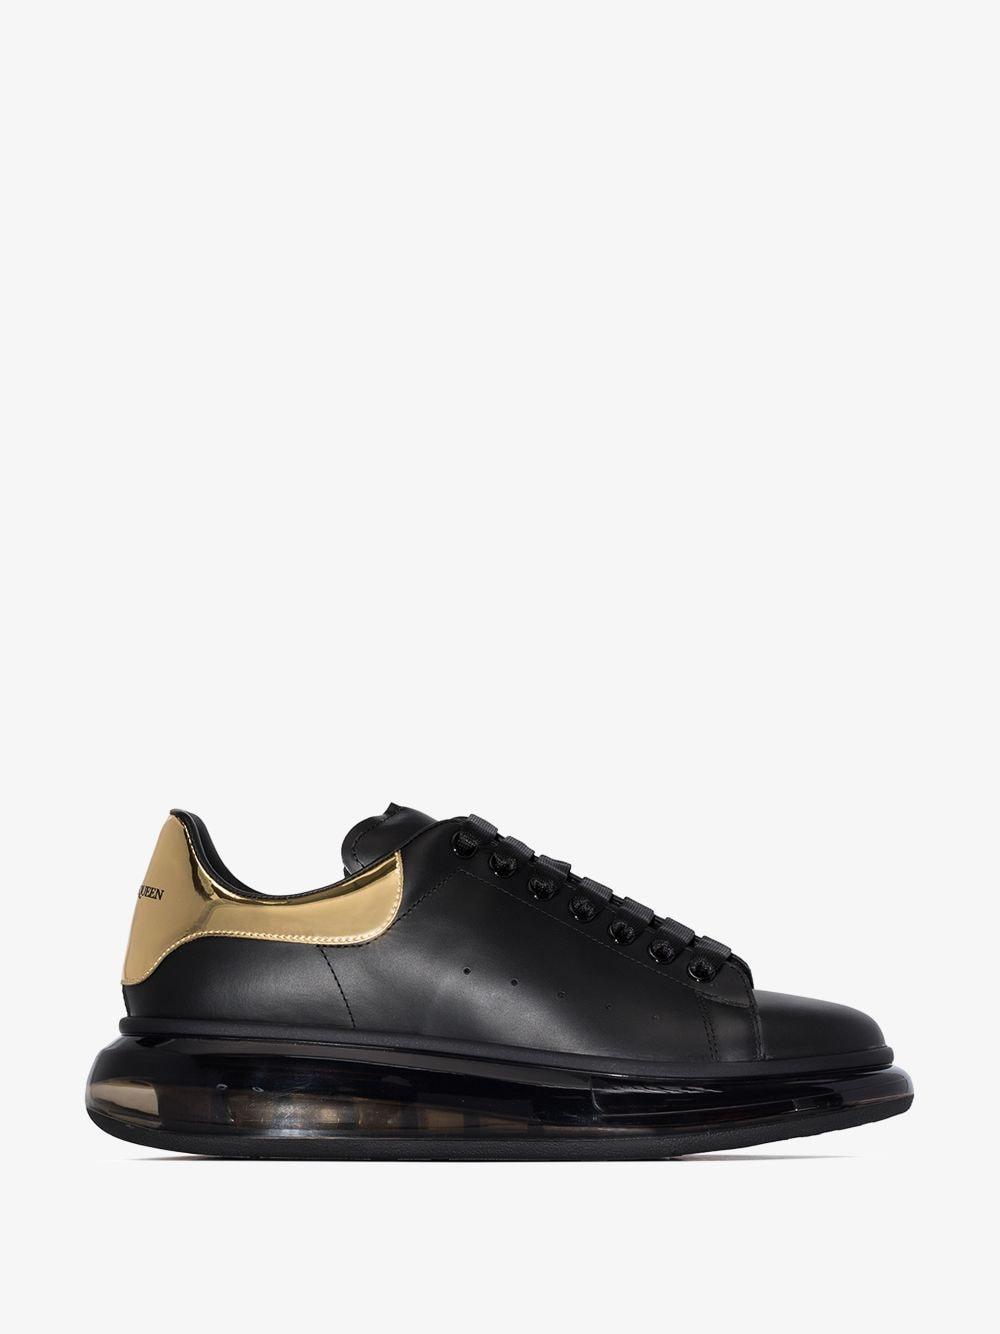 Latterlig afstemning Bukser Alexander McQueen Oversized Leather Sneakers Black/gold for Men | Lyst